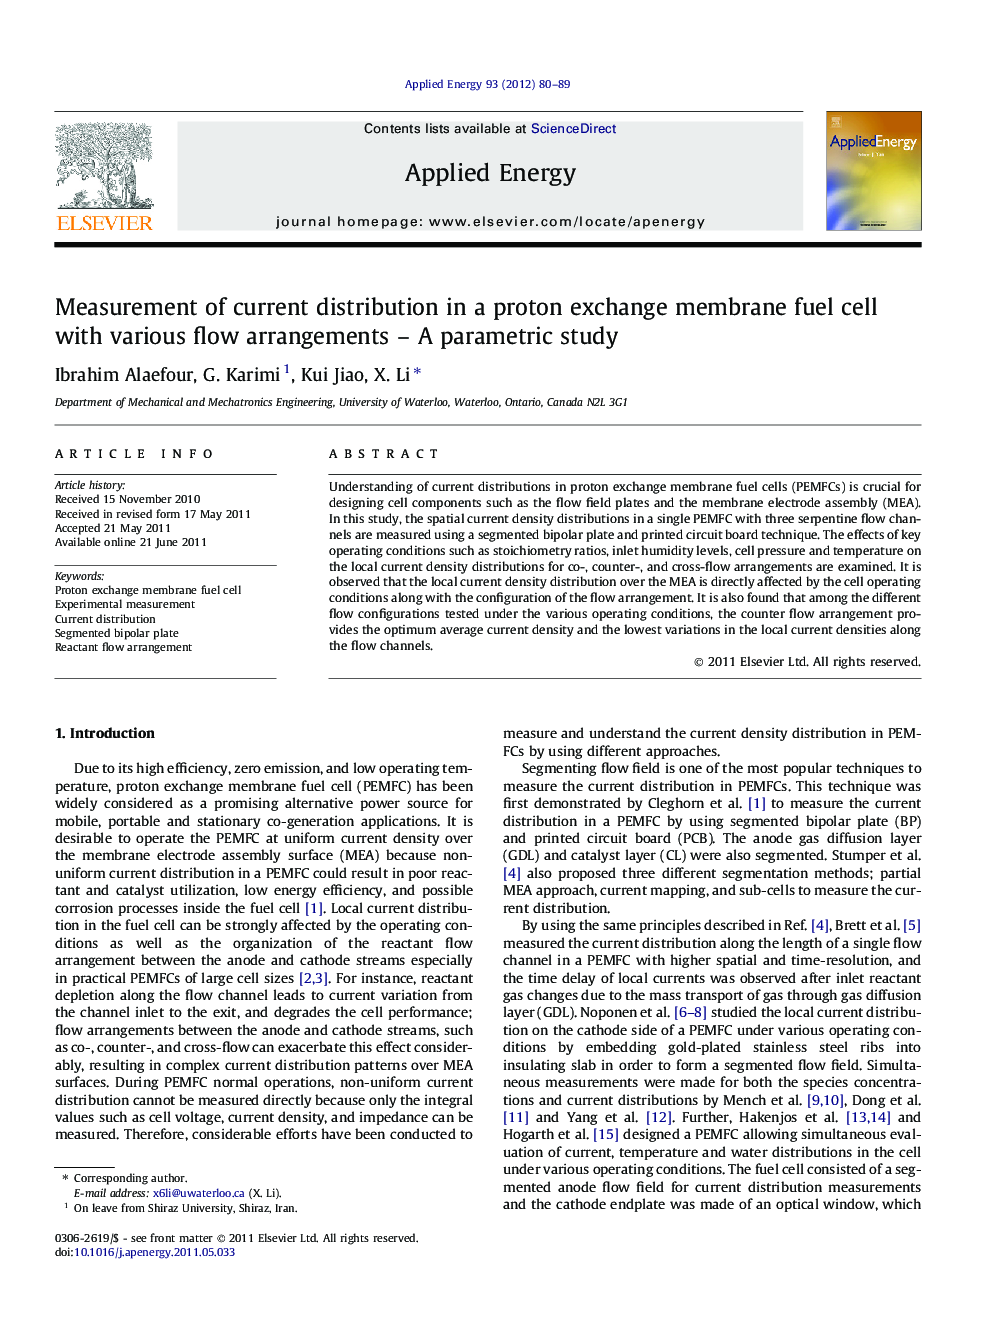 Measurement of current distribution in a proton exchange membrane fuel cell with various flow arrangements – A parametric study